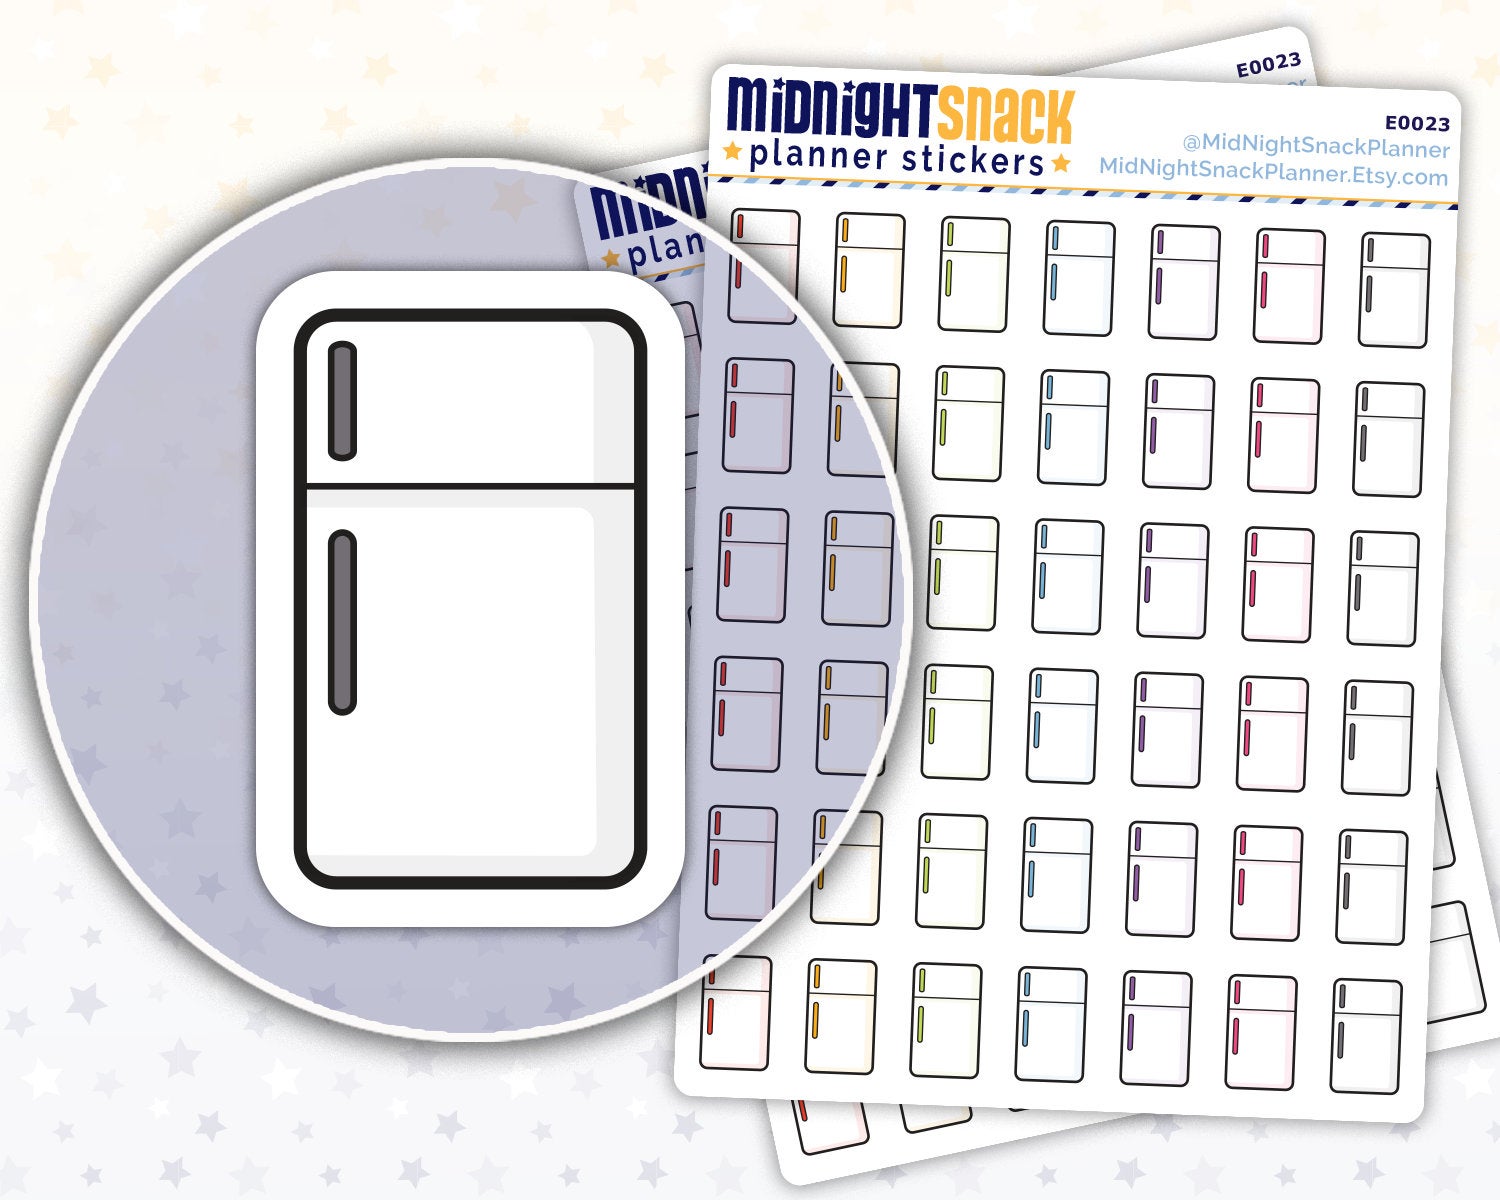 Refrigerator Icon: Clean the Fridge Planner Stickers Midnight Snack Planner